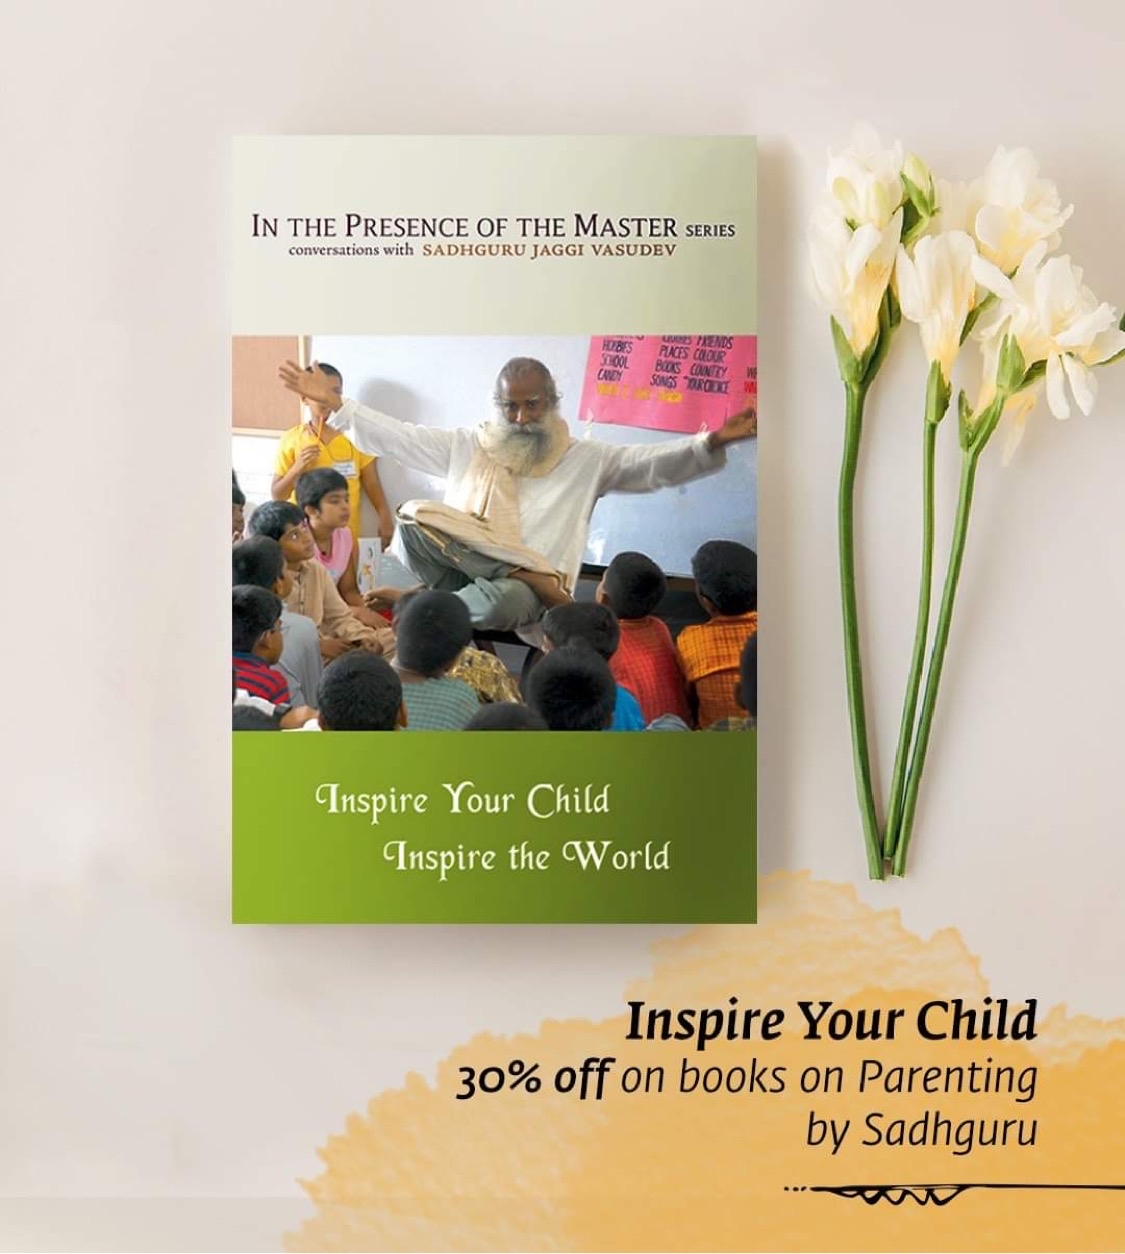 Books on Parenting 